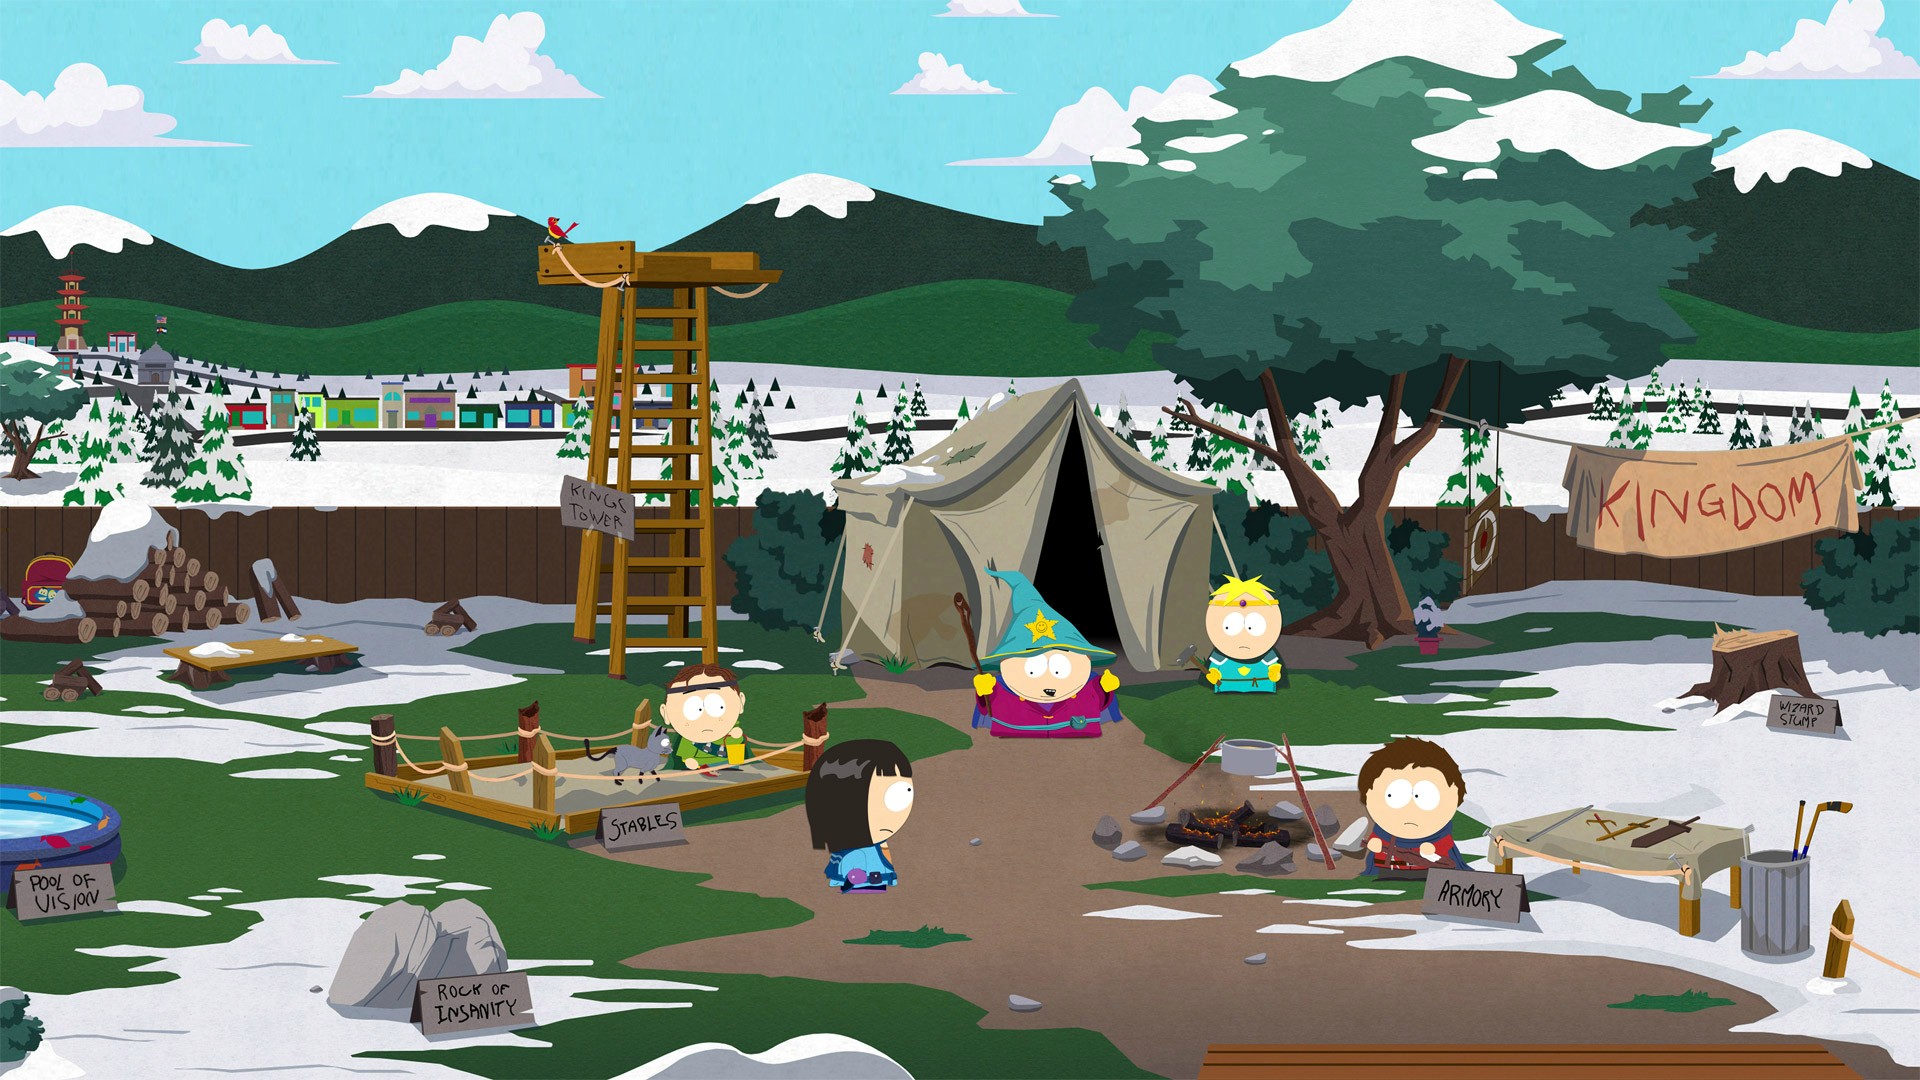 Vreski s game. Игра Южный парк палка истины. Южный парк South Park: the Stick of Truth. Южный парк the Stick of Truth. Игра Южный парк 1.